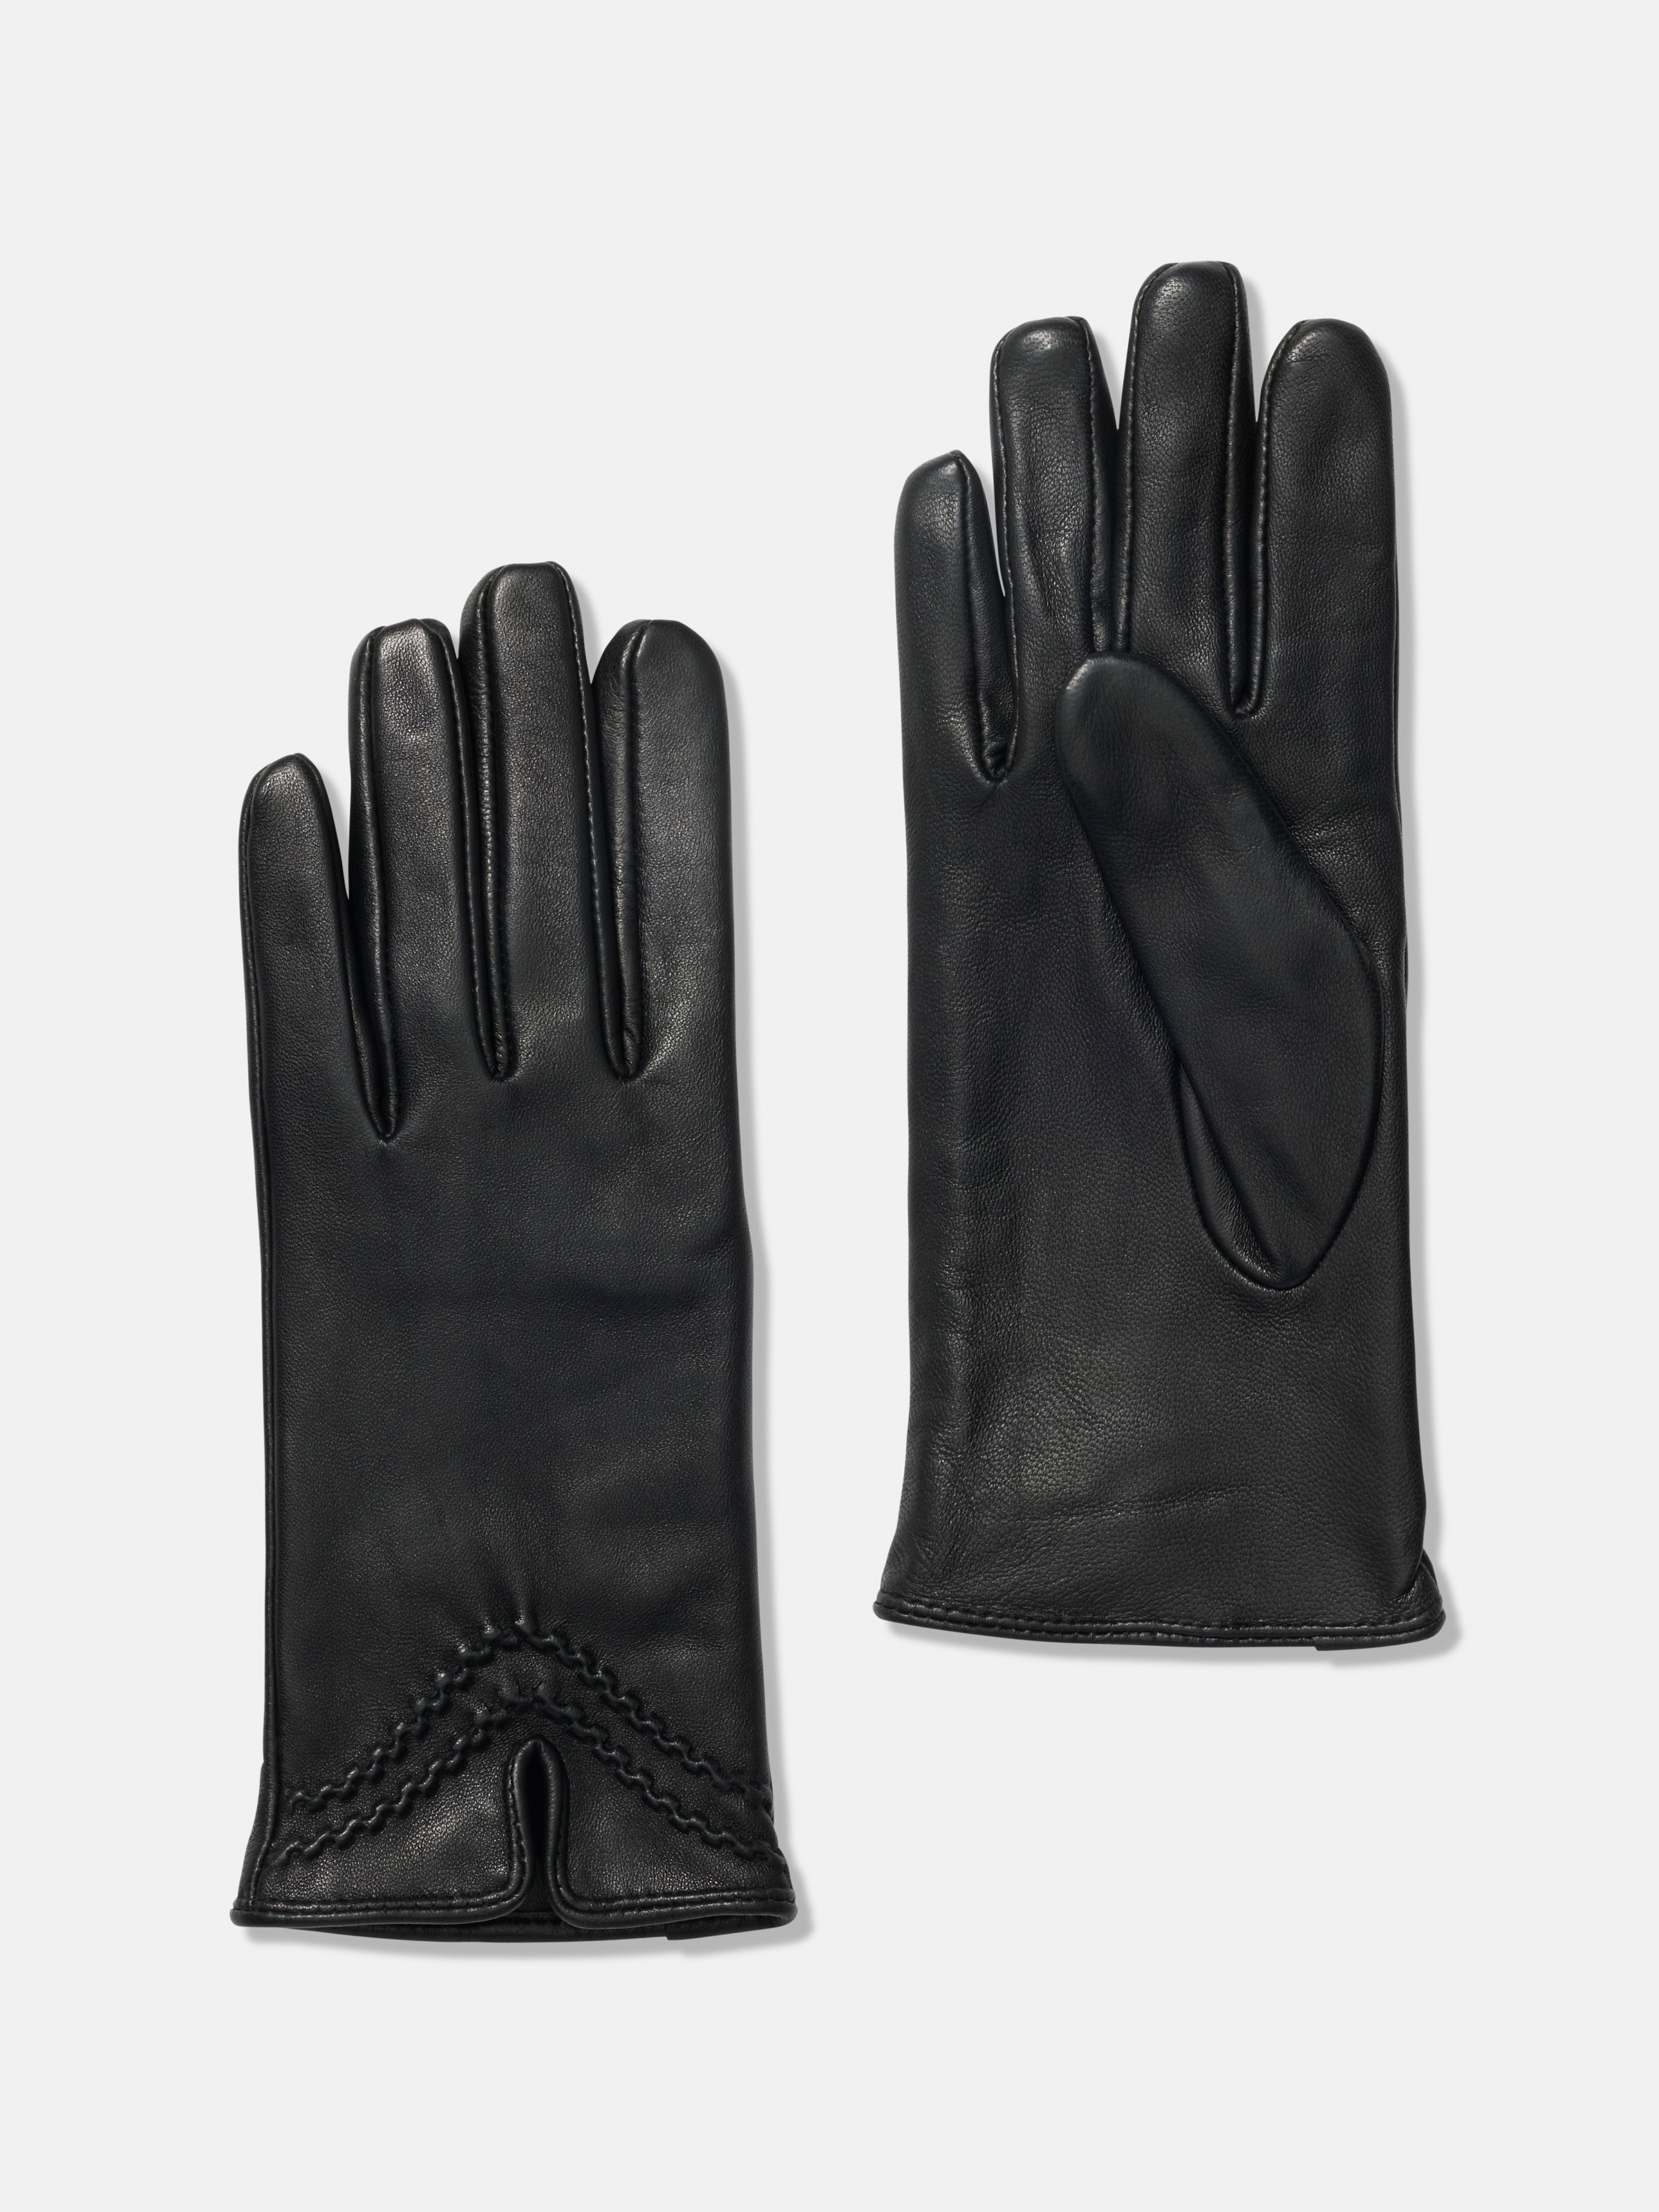 Stitch Detail Leather Gloves                                                                                                    